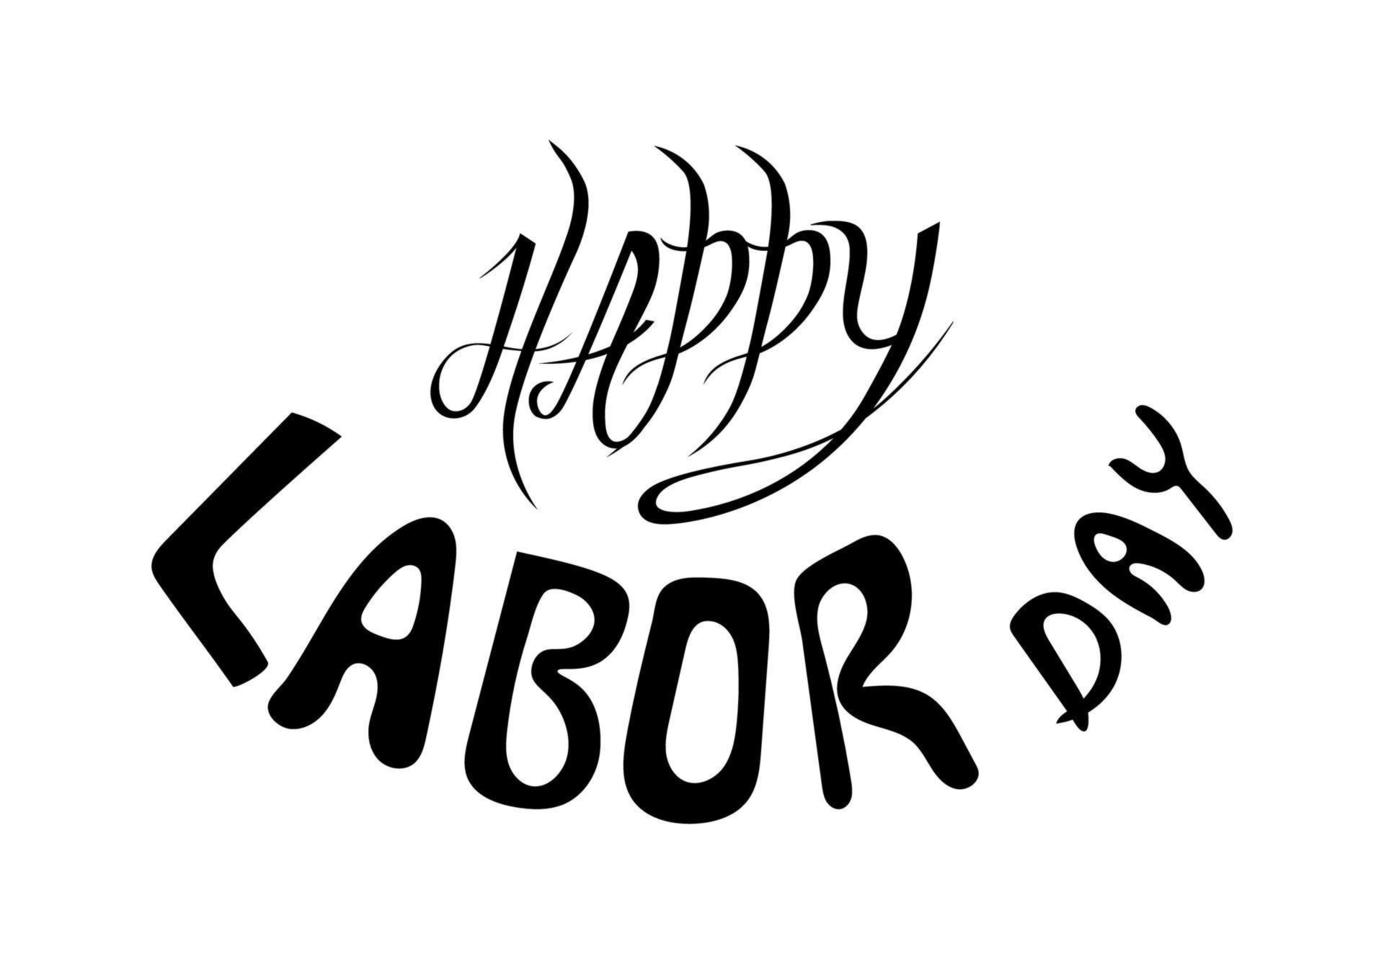 Happy Labor Day card. vector